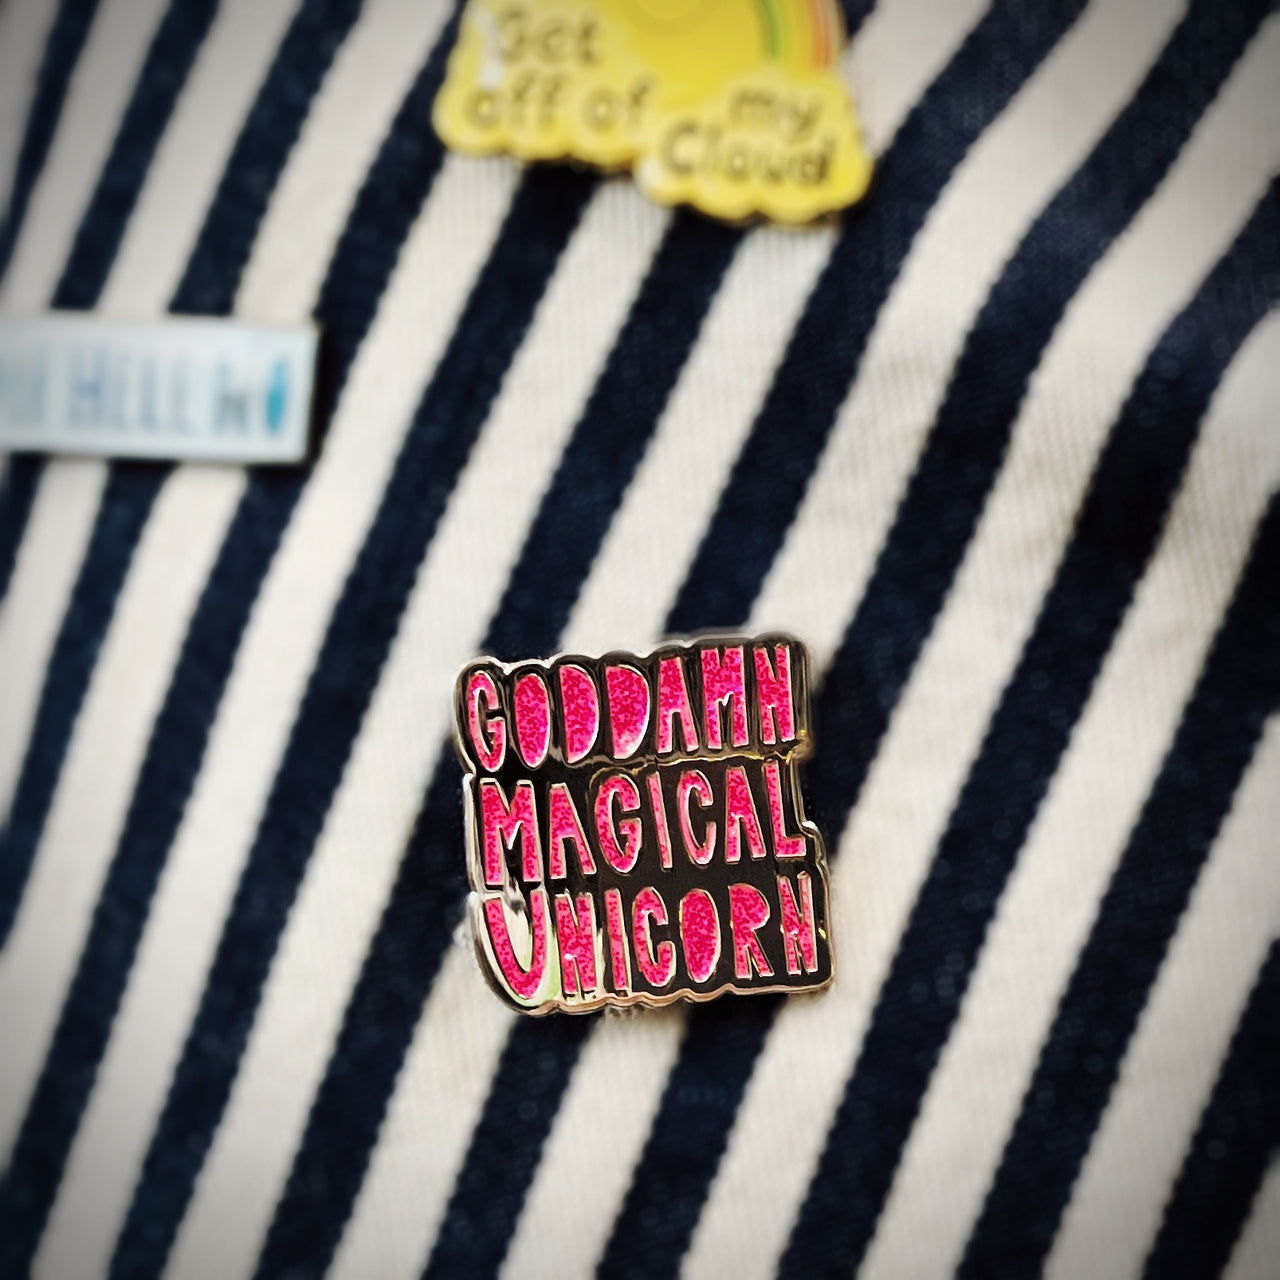 Magical Unicorn Enamel Pin